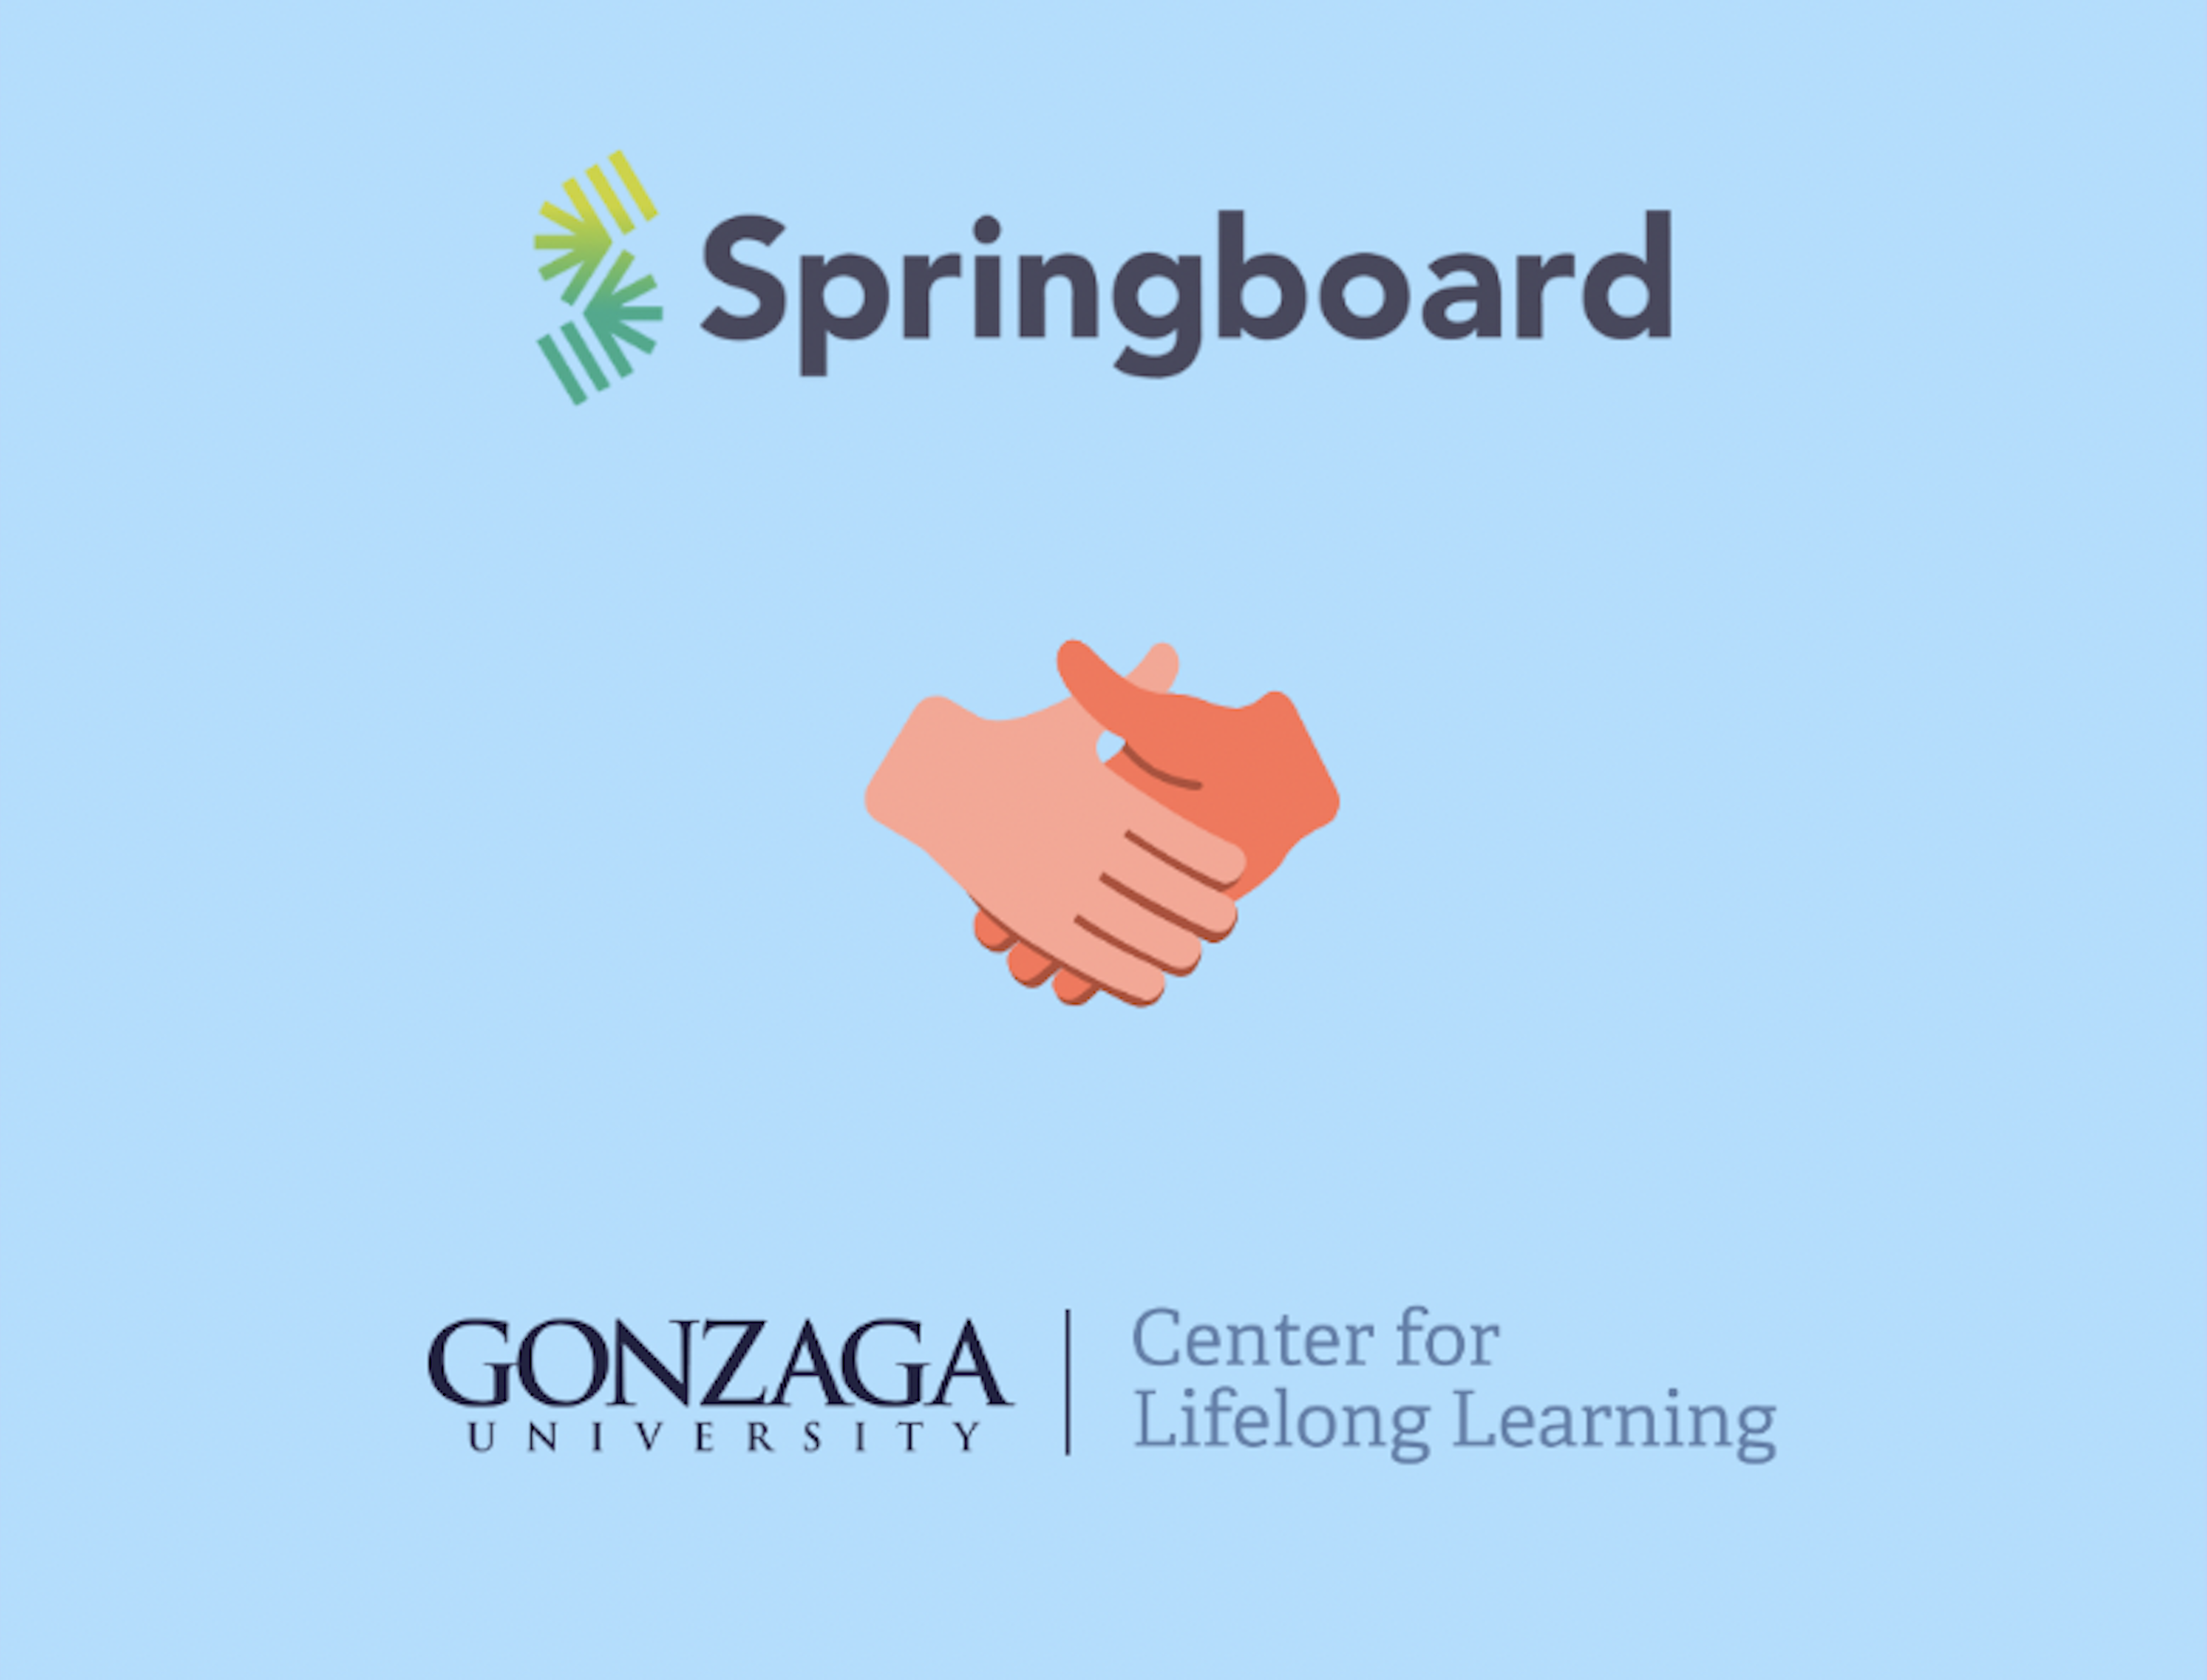 Springboard partners with Gonzaga University